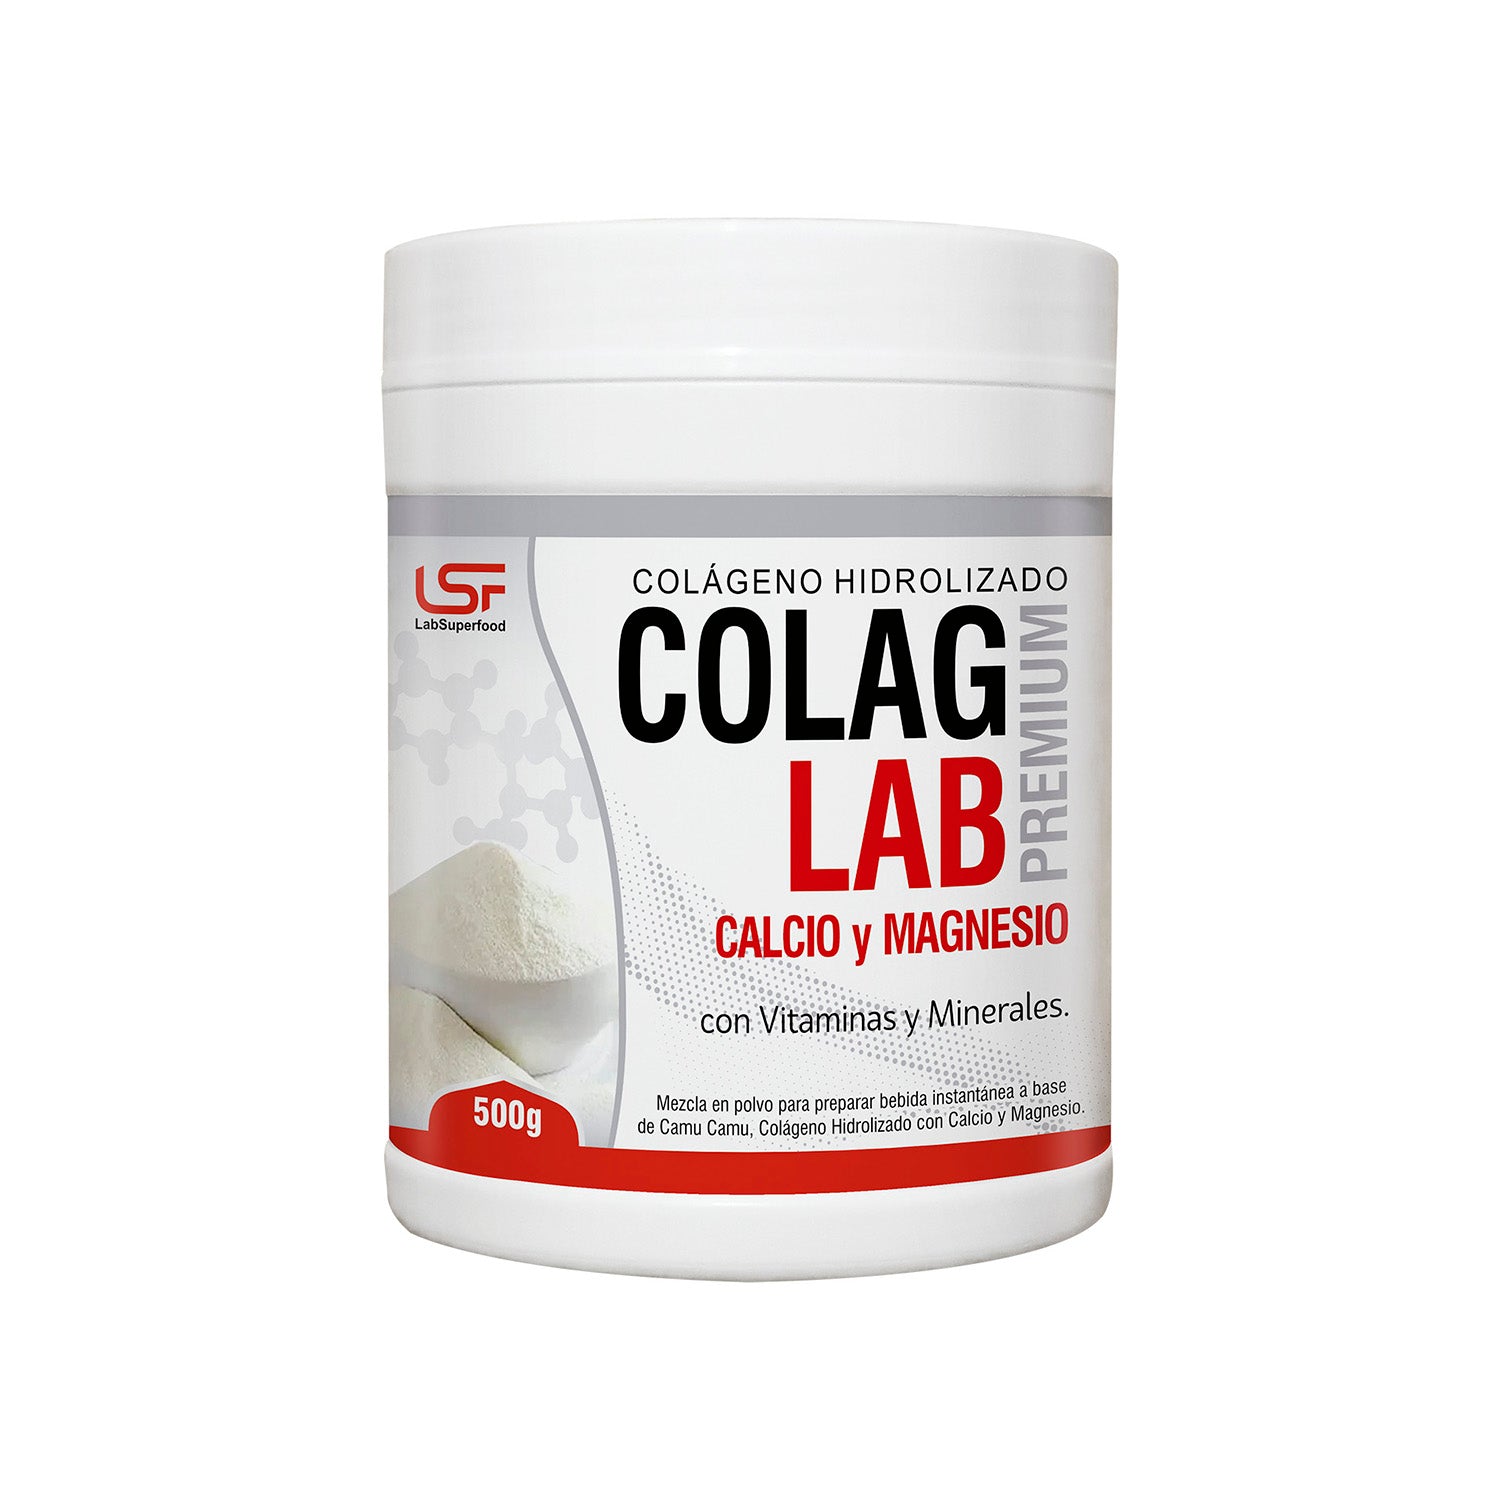 Colag Lab Calcio y Magnesio - 500g